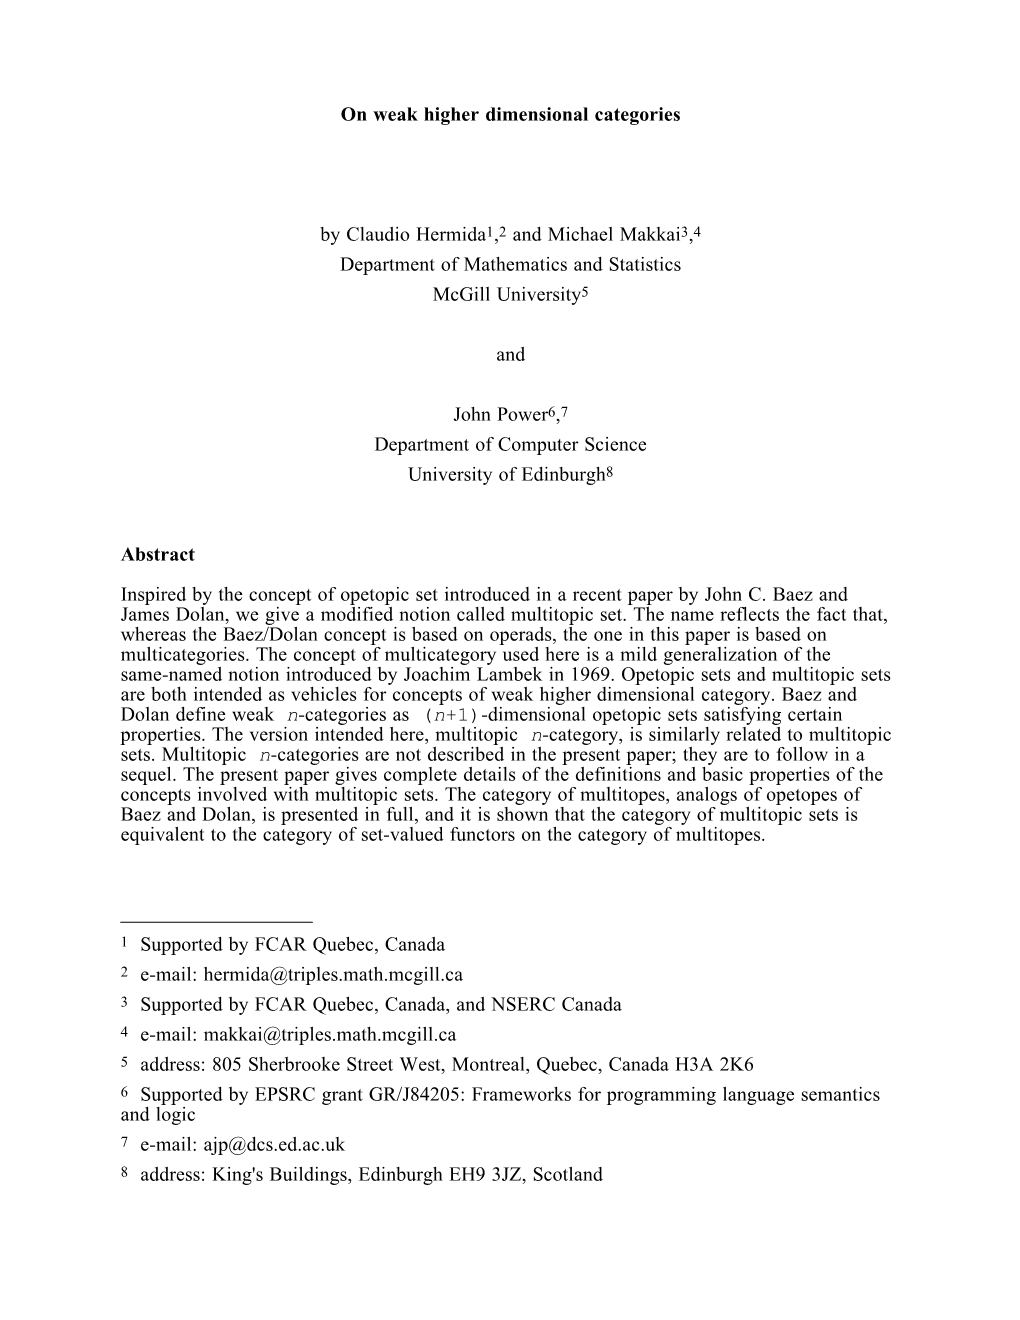 On Weak Higher Dimensional Categories by Claudio Hermida!," and Michael Makkai#,$ Department of Mathematics and Statistics